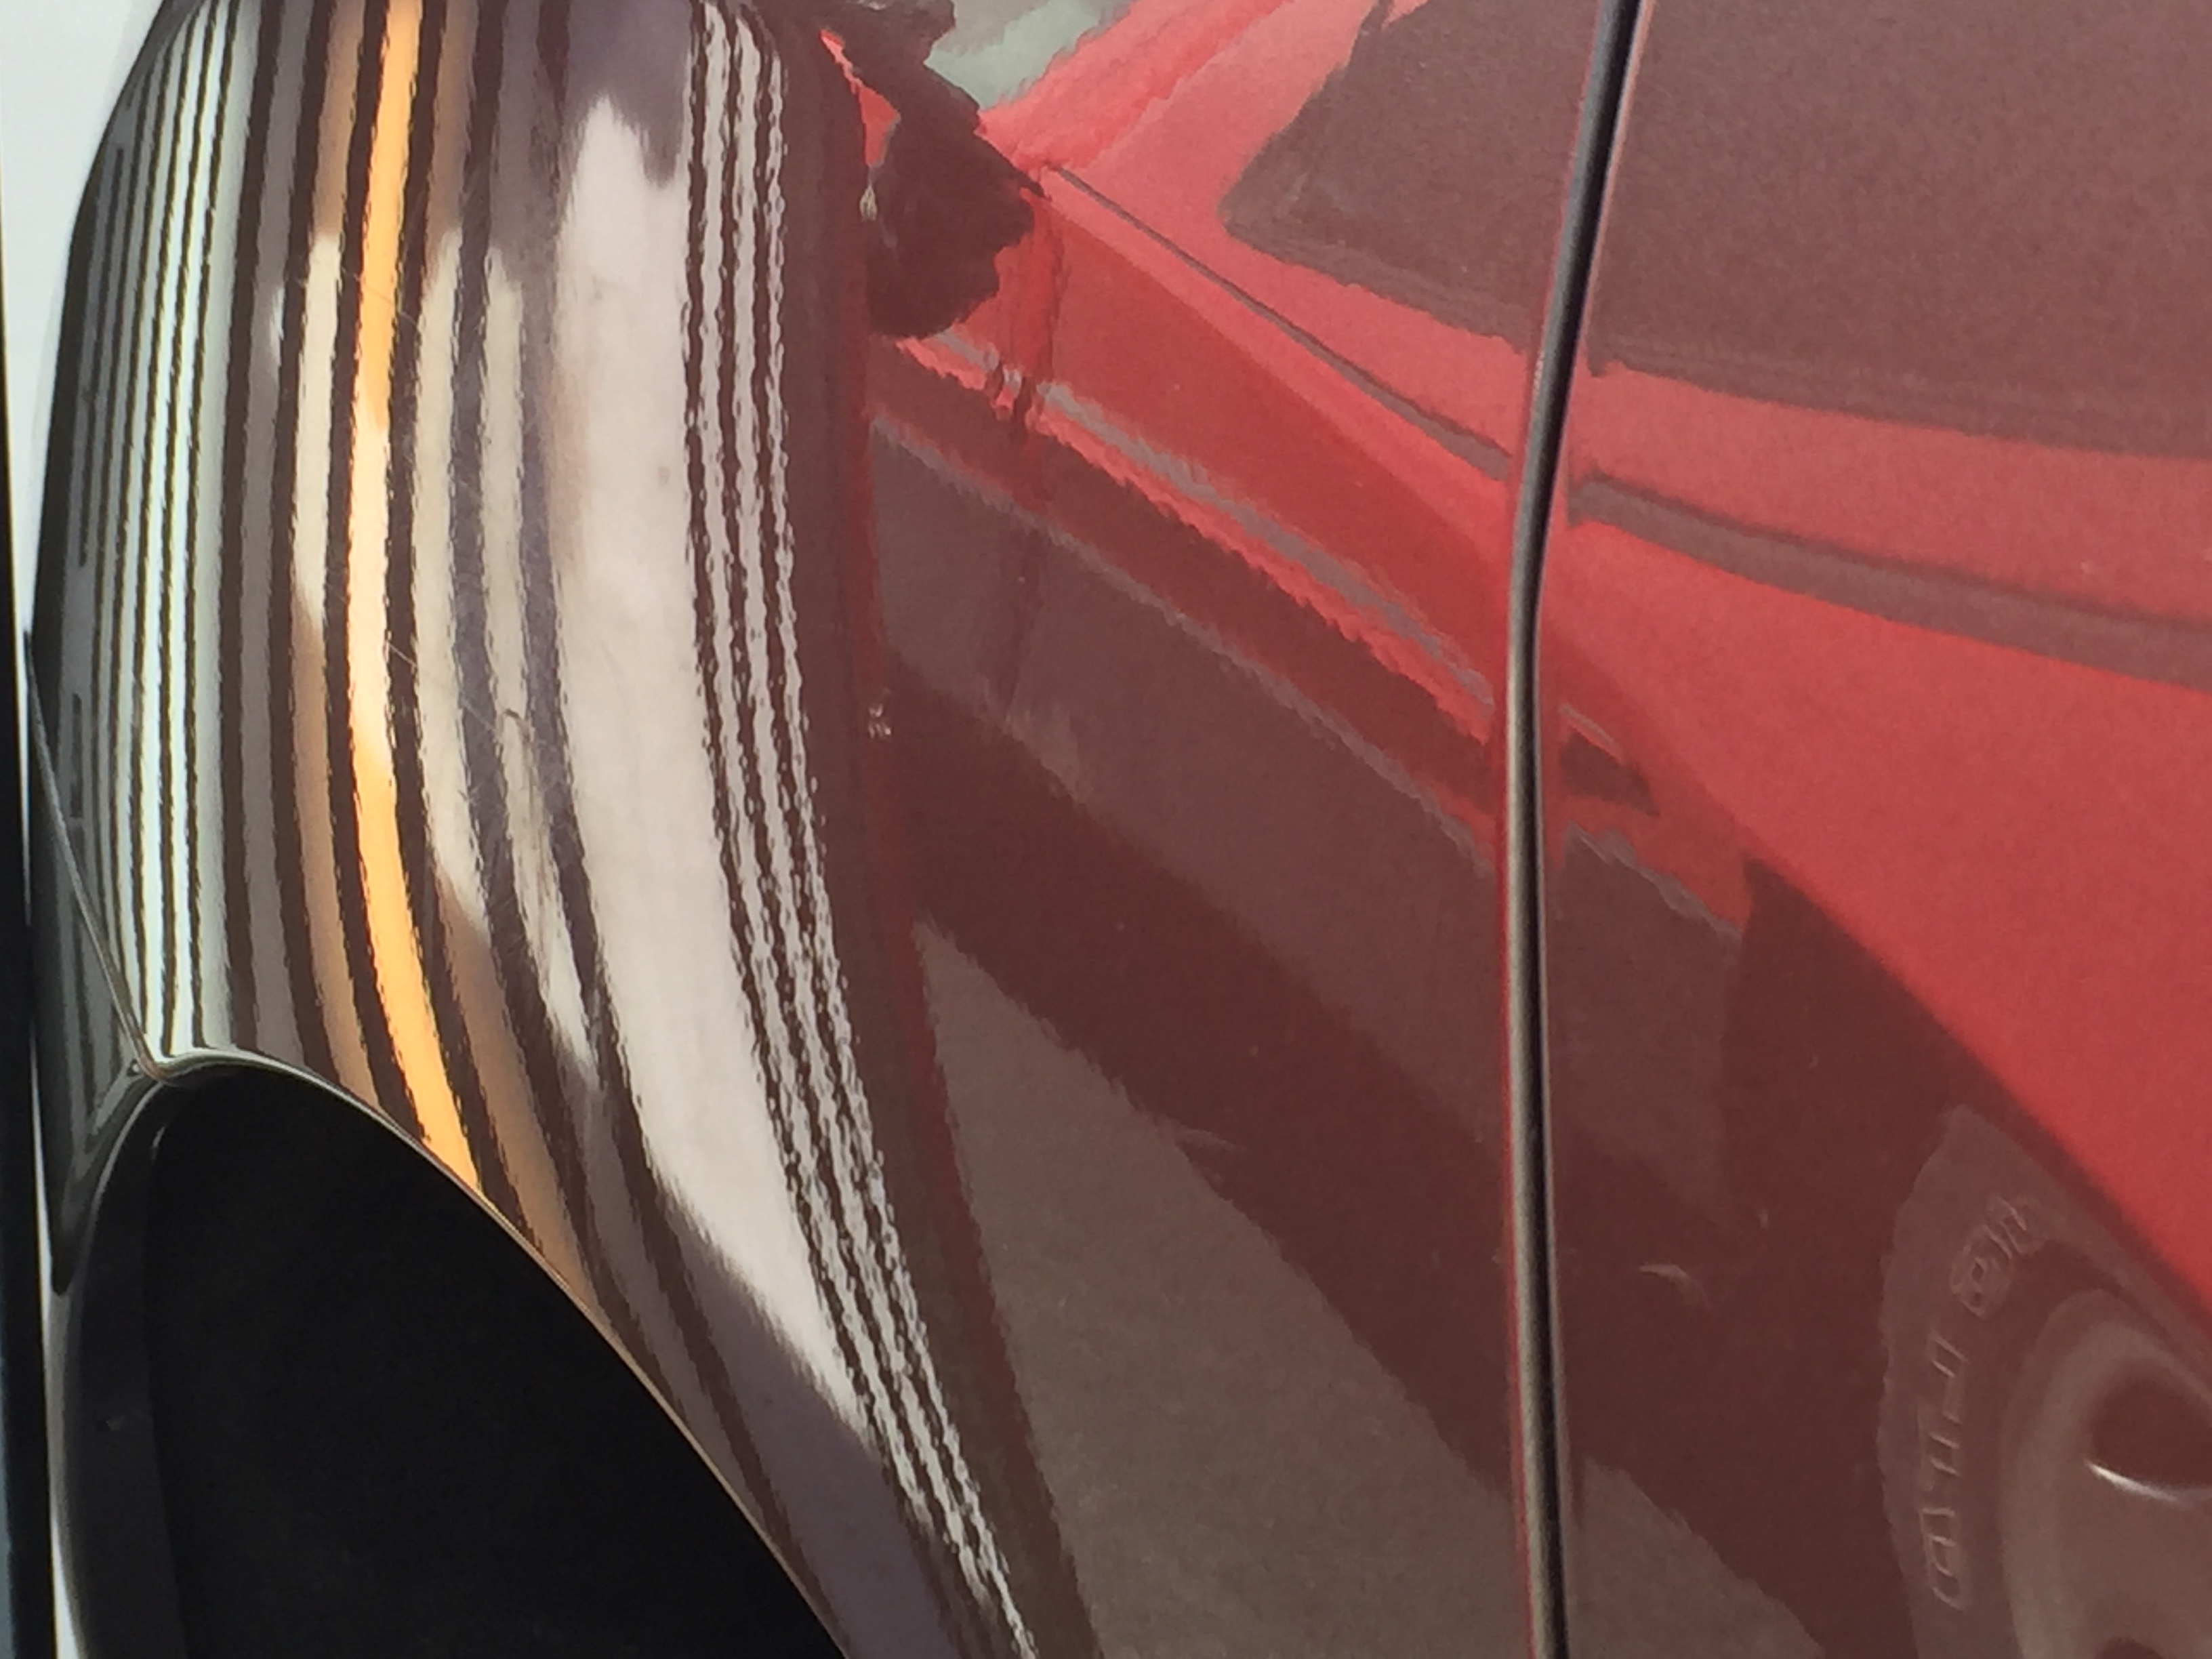 2012 Nissan Murano Rear Quarter Dent Repair, Paintless Dent Removal, http://217dent.com